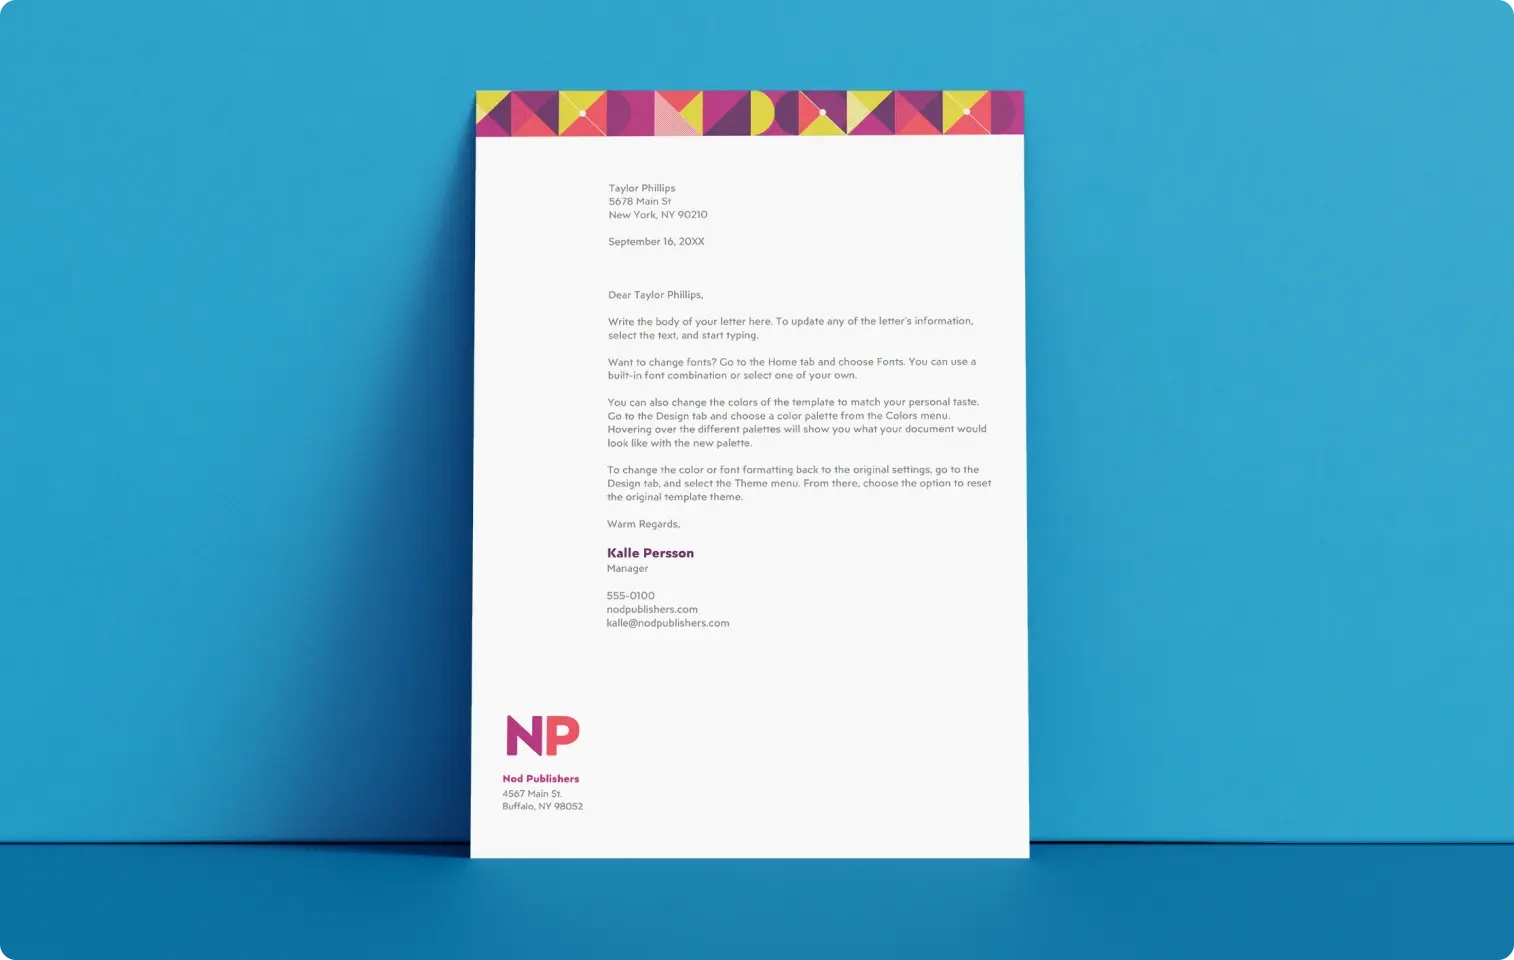 Letterhead with a colorful, geometric design.